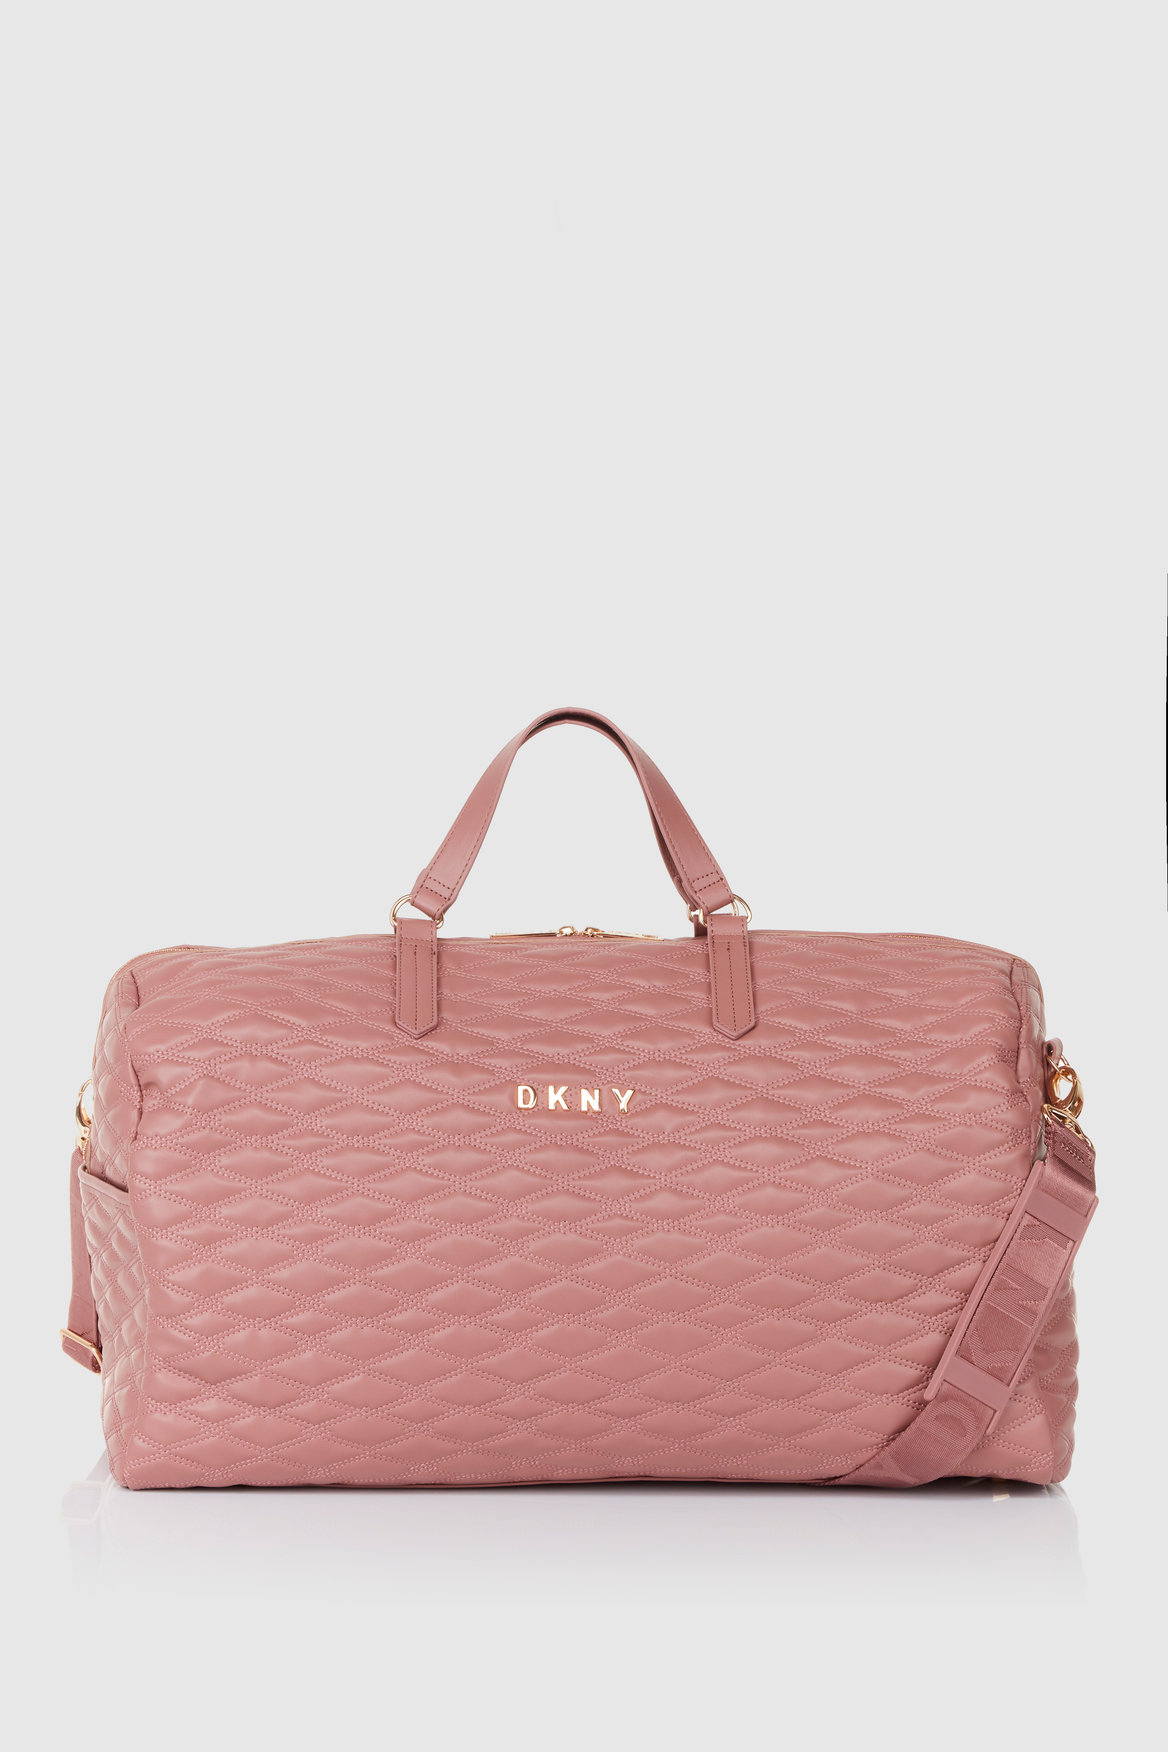 DKNY Bags - Tote Bags, Travel Bags & more – Strandbags Australia